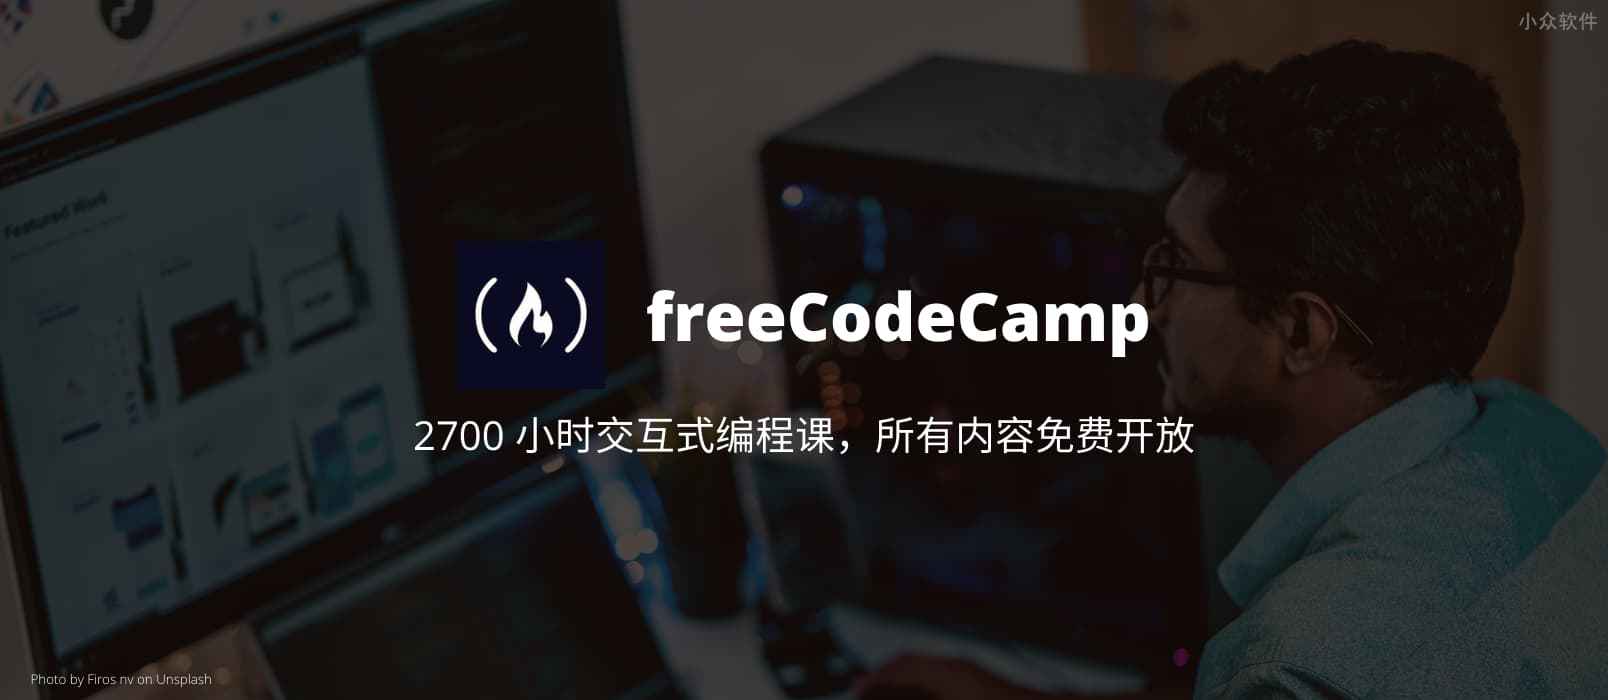 freeCodeCamp -  2700 小时交互式编程课，所有内容免费开放